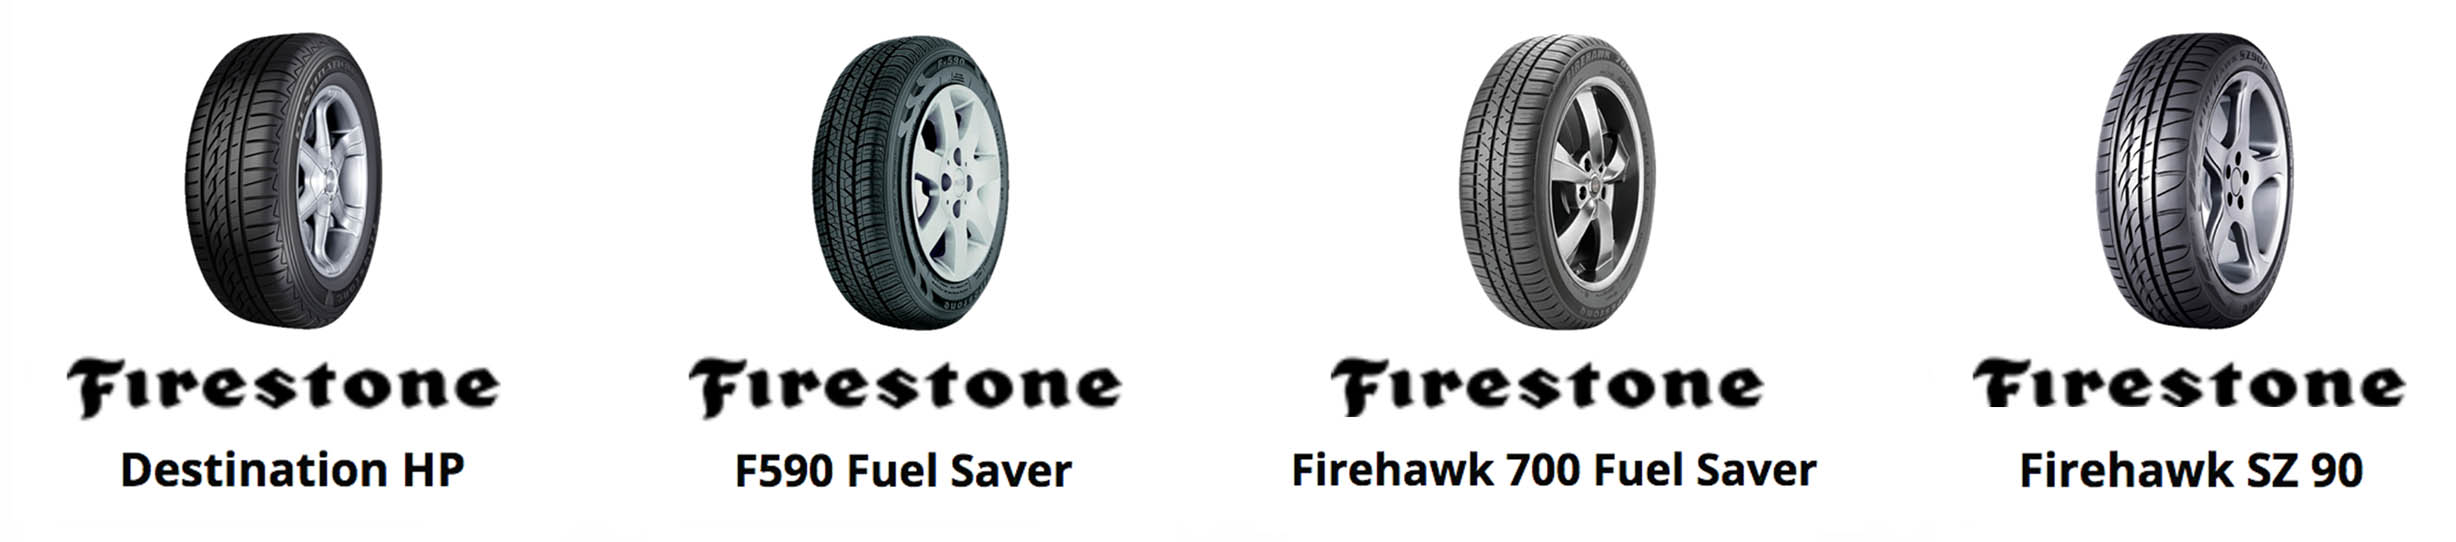 Firestone tyres slide cardiff